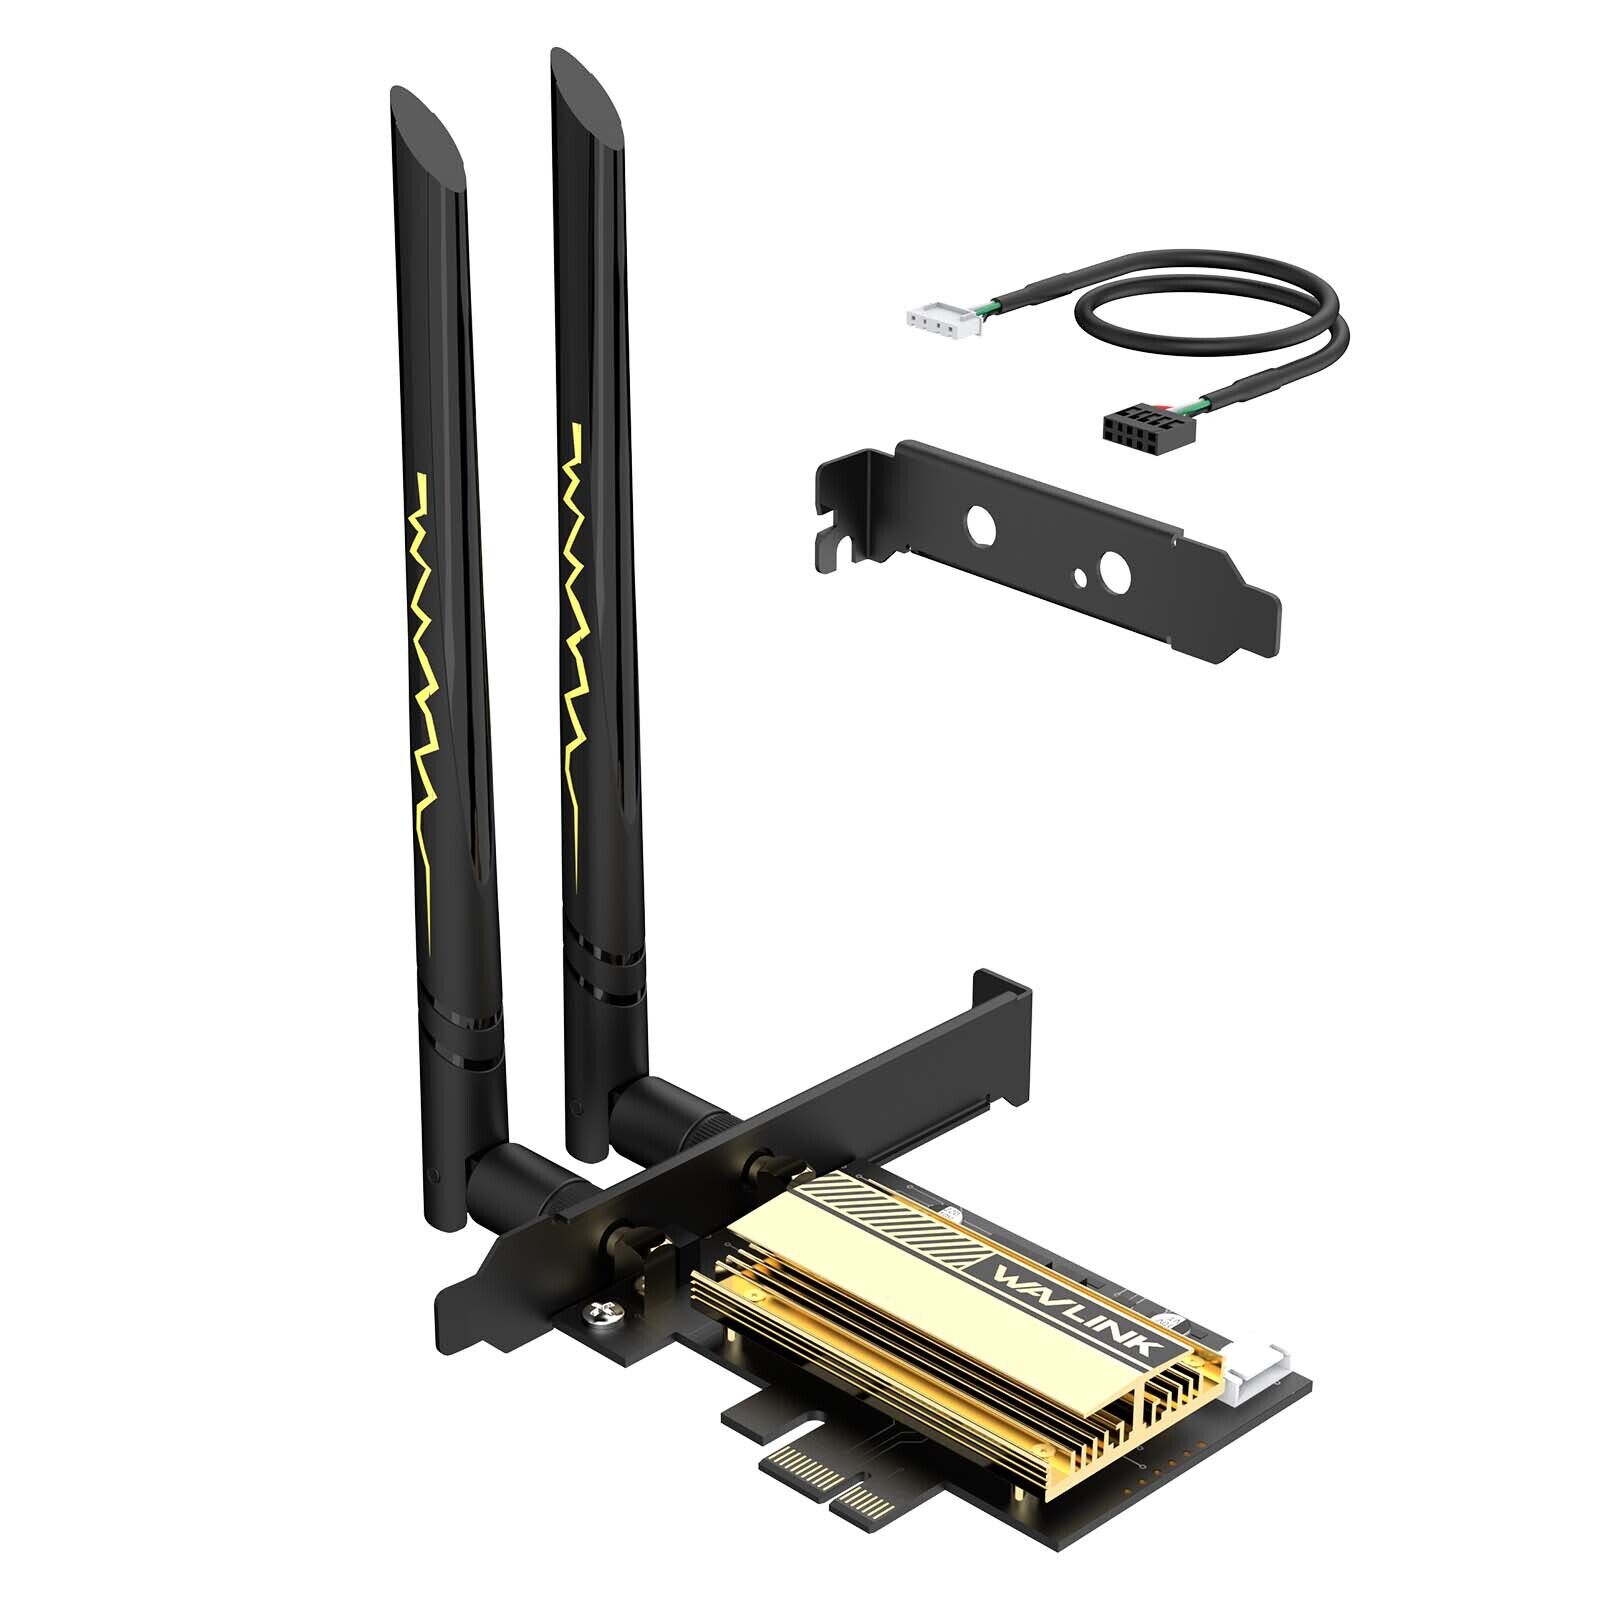 AX5400M WiFi 6E PCIe Network Card Tri-Band AX210 Wireless Adapter Bluetooth 5.3